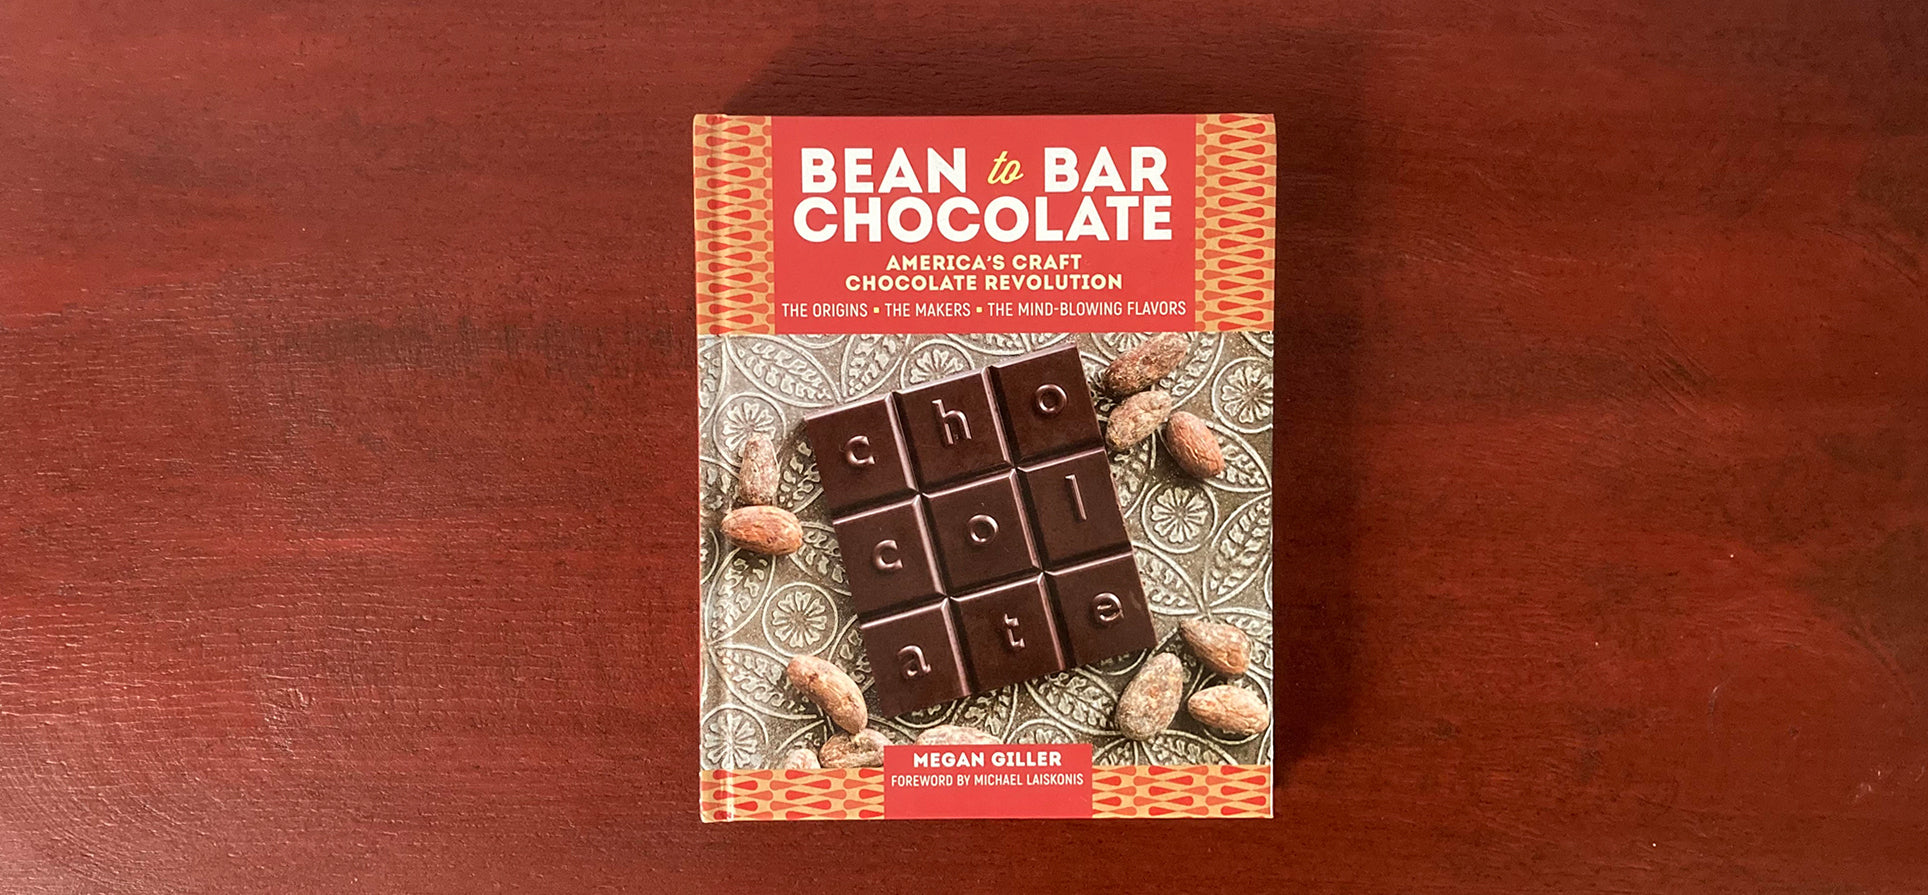 Megan Giller La autora de “Bean-to-Bar Chocolate”.